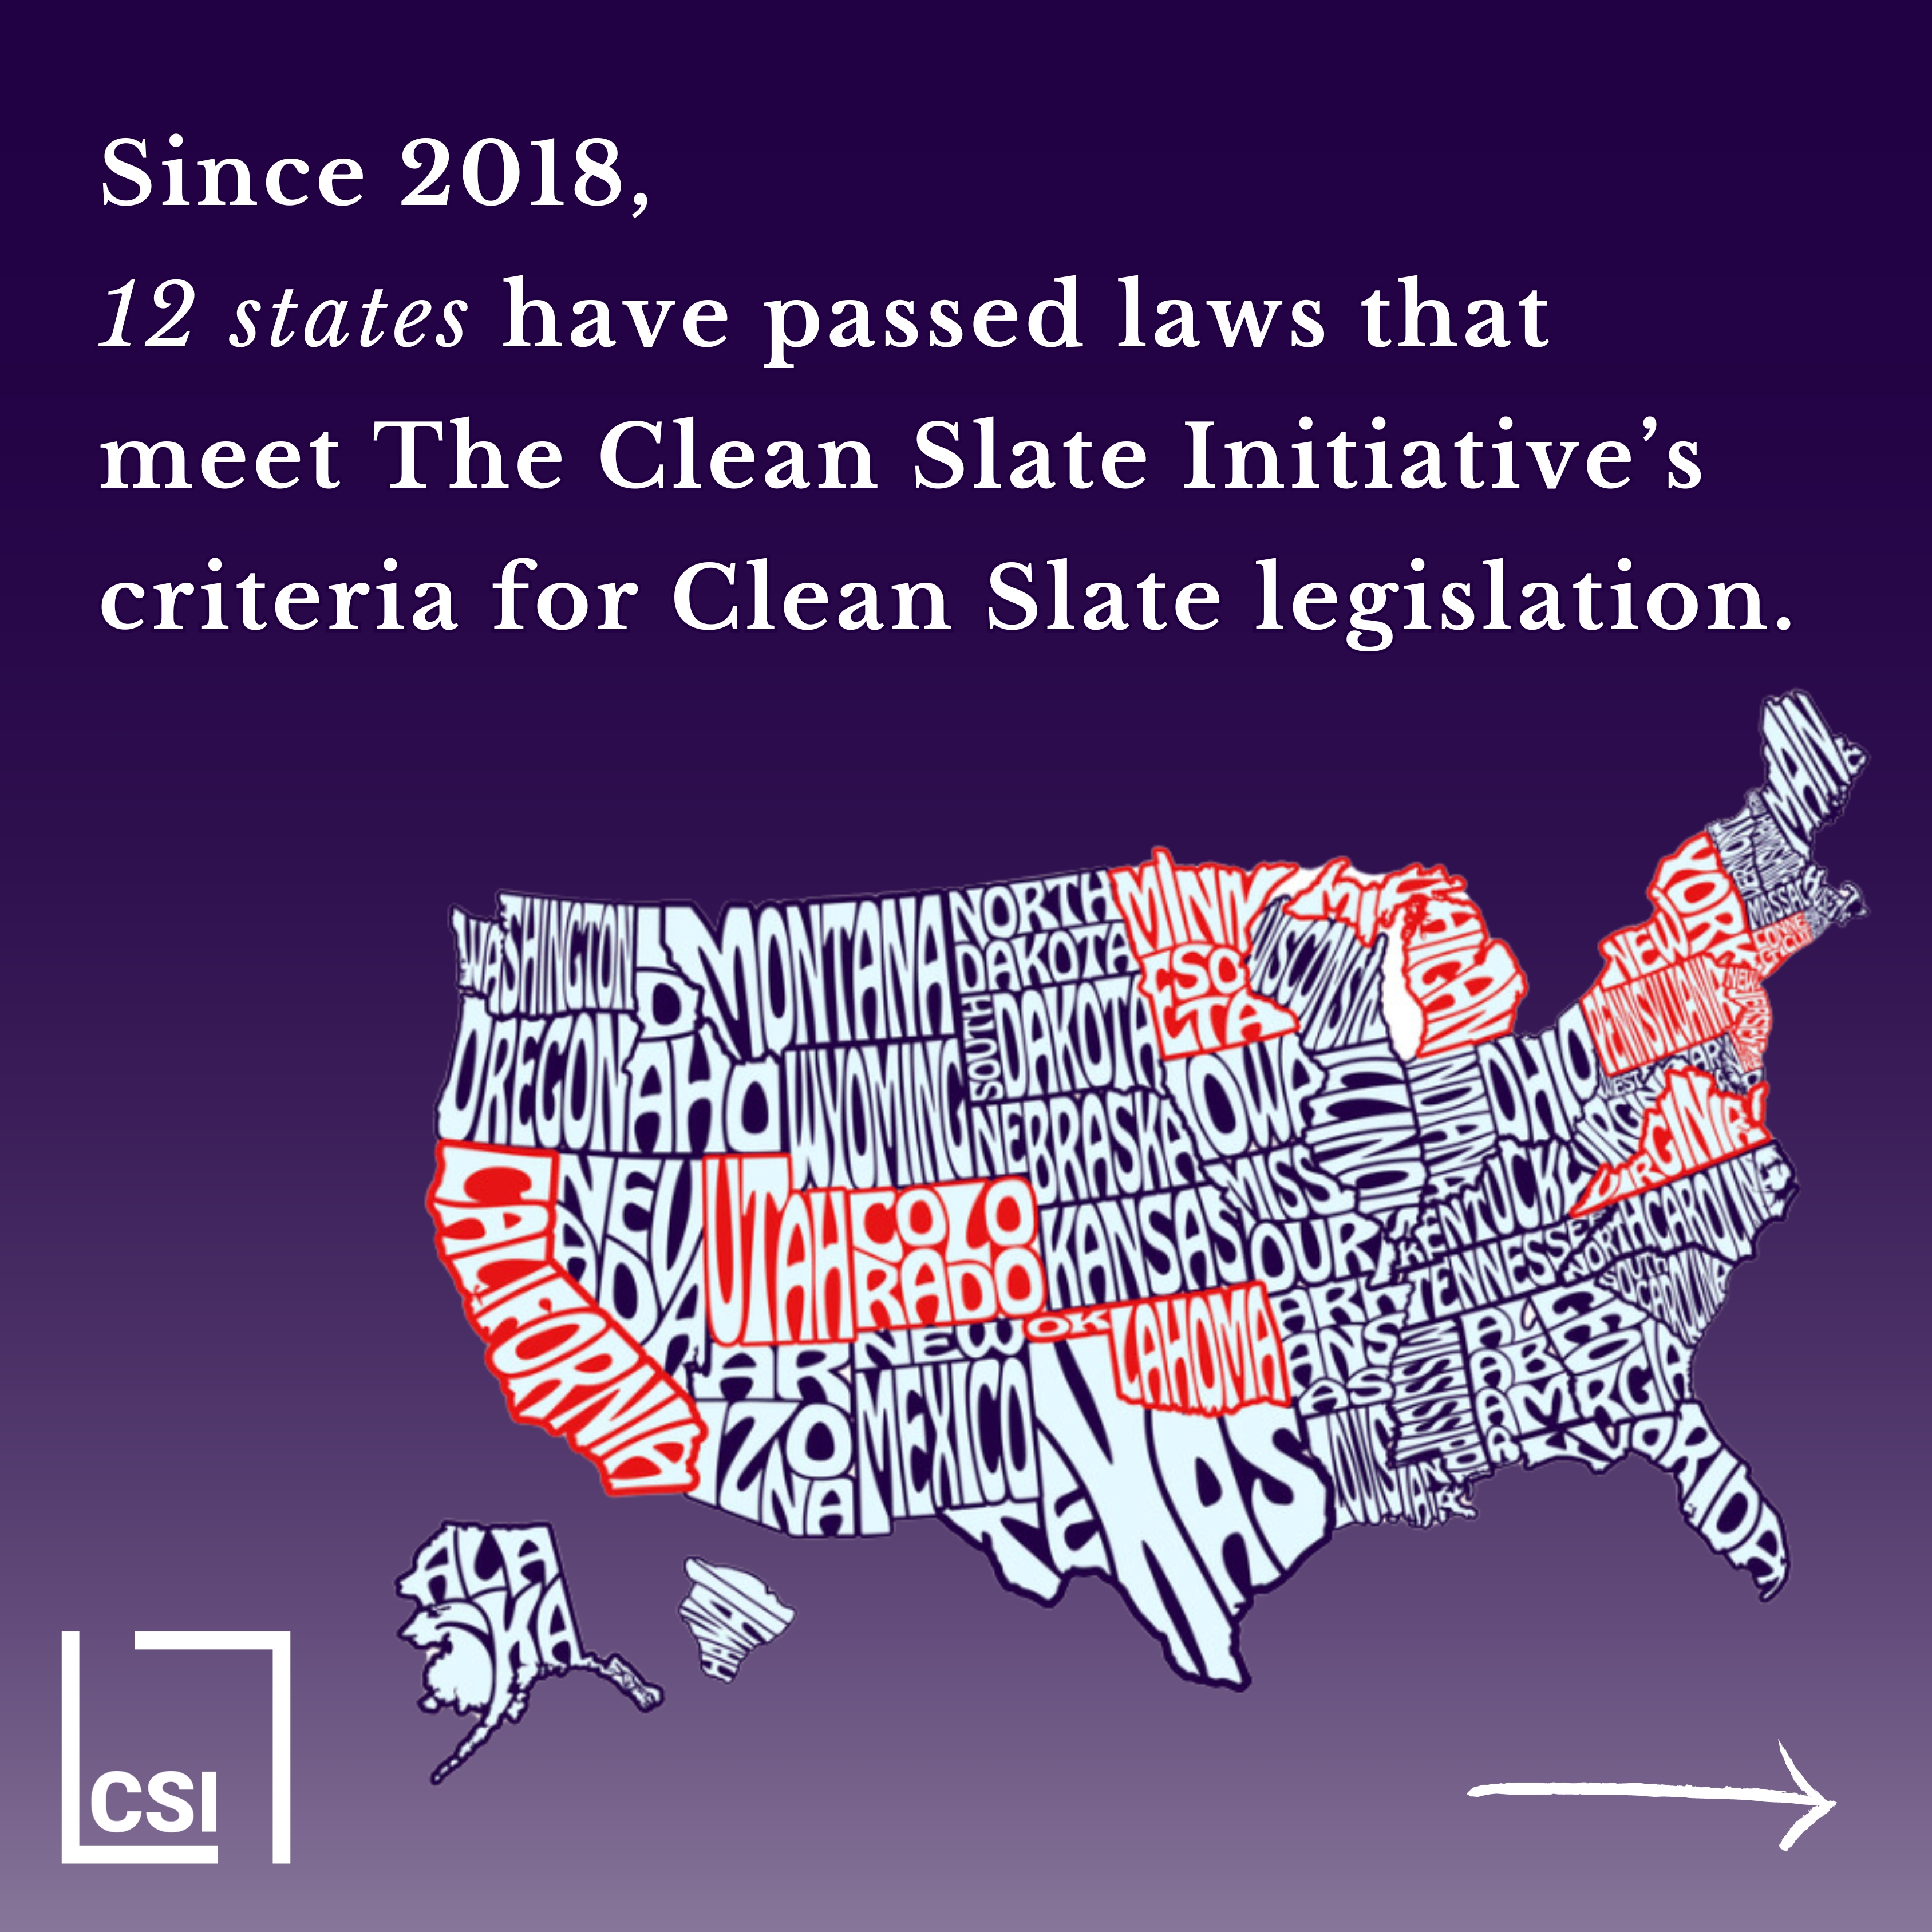 The Clean Slate Initiative